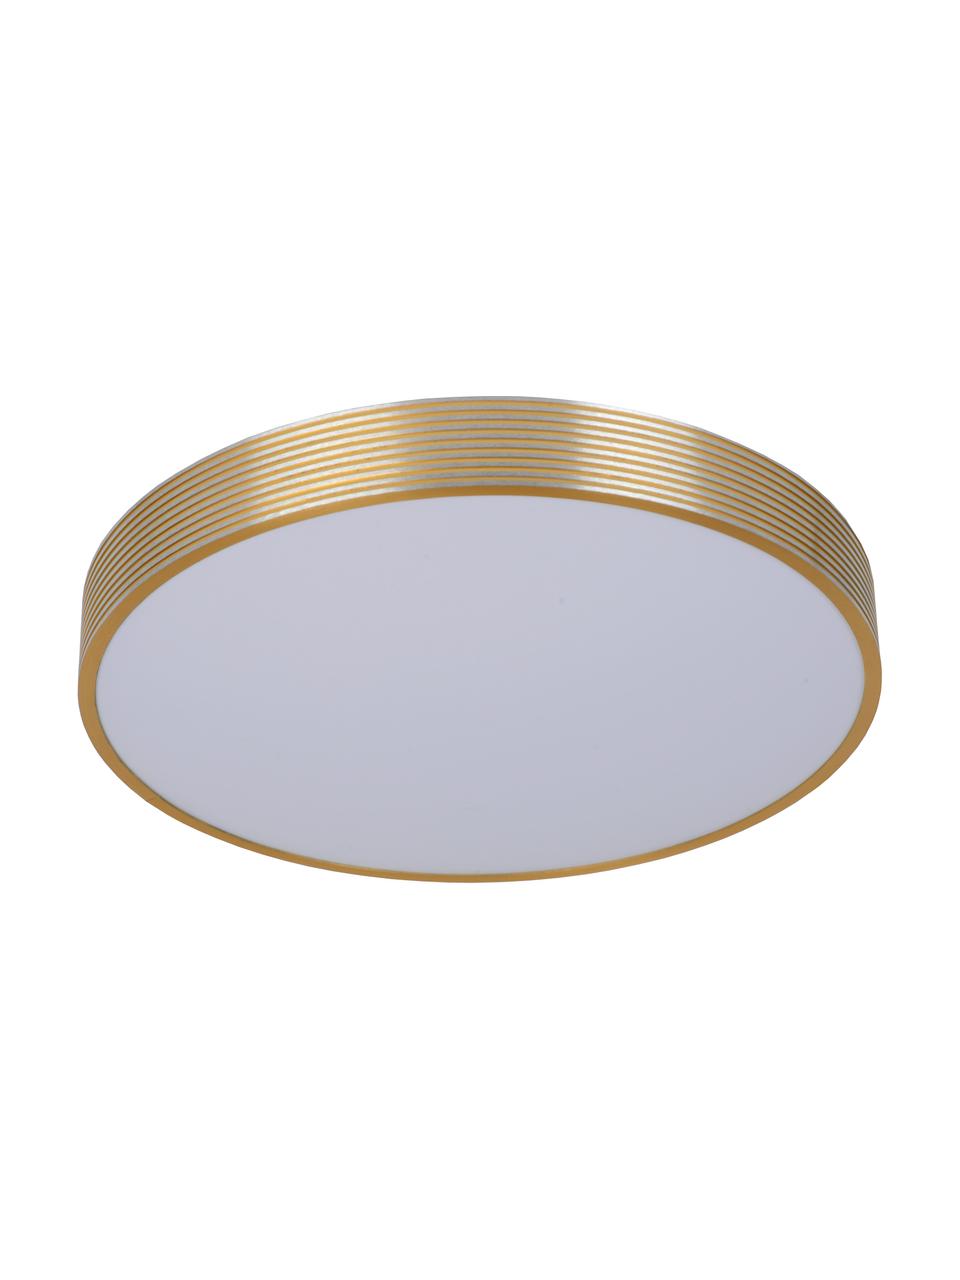 LED-Deckenleuchte Malin aus Metall, Lampenschirm: Metall, Diffusorscheibe: Acryl, Goldfarben, Weiß, Ø 39 x H 7 cm